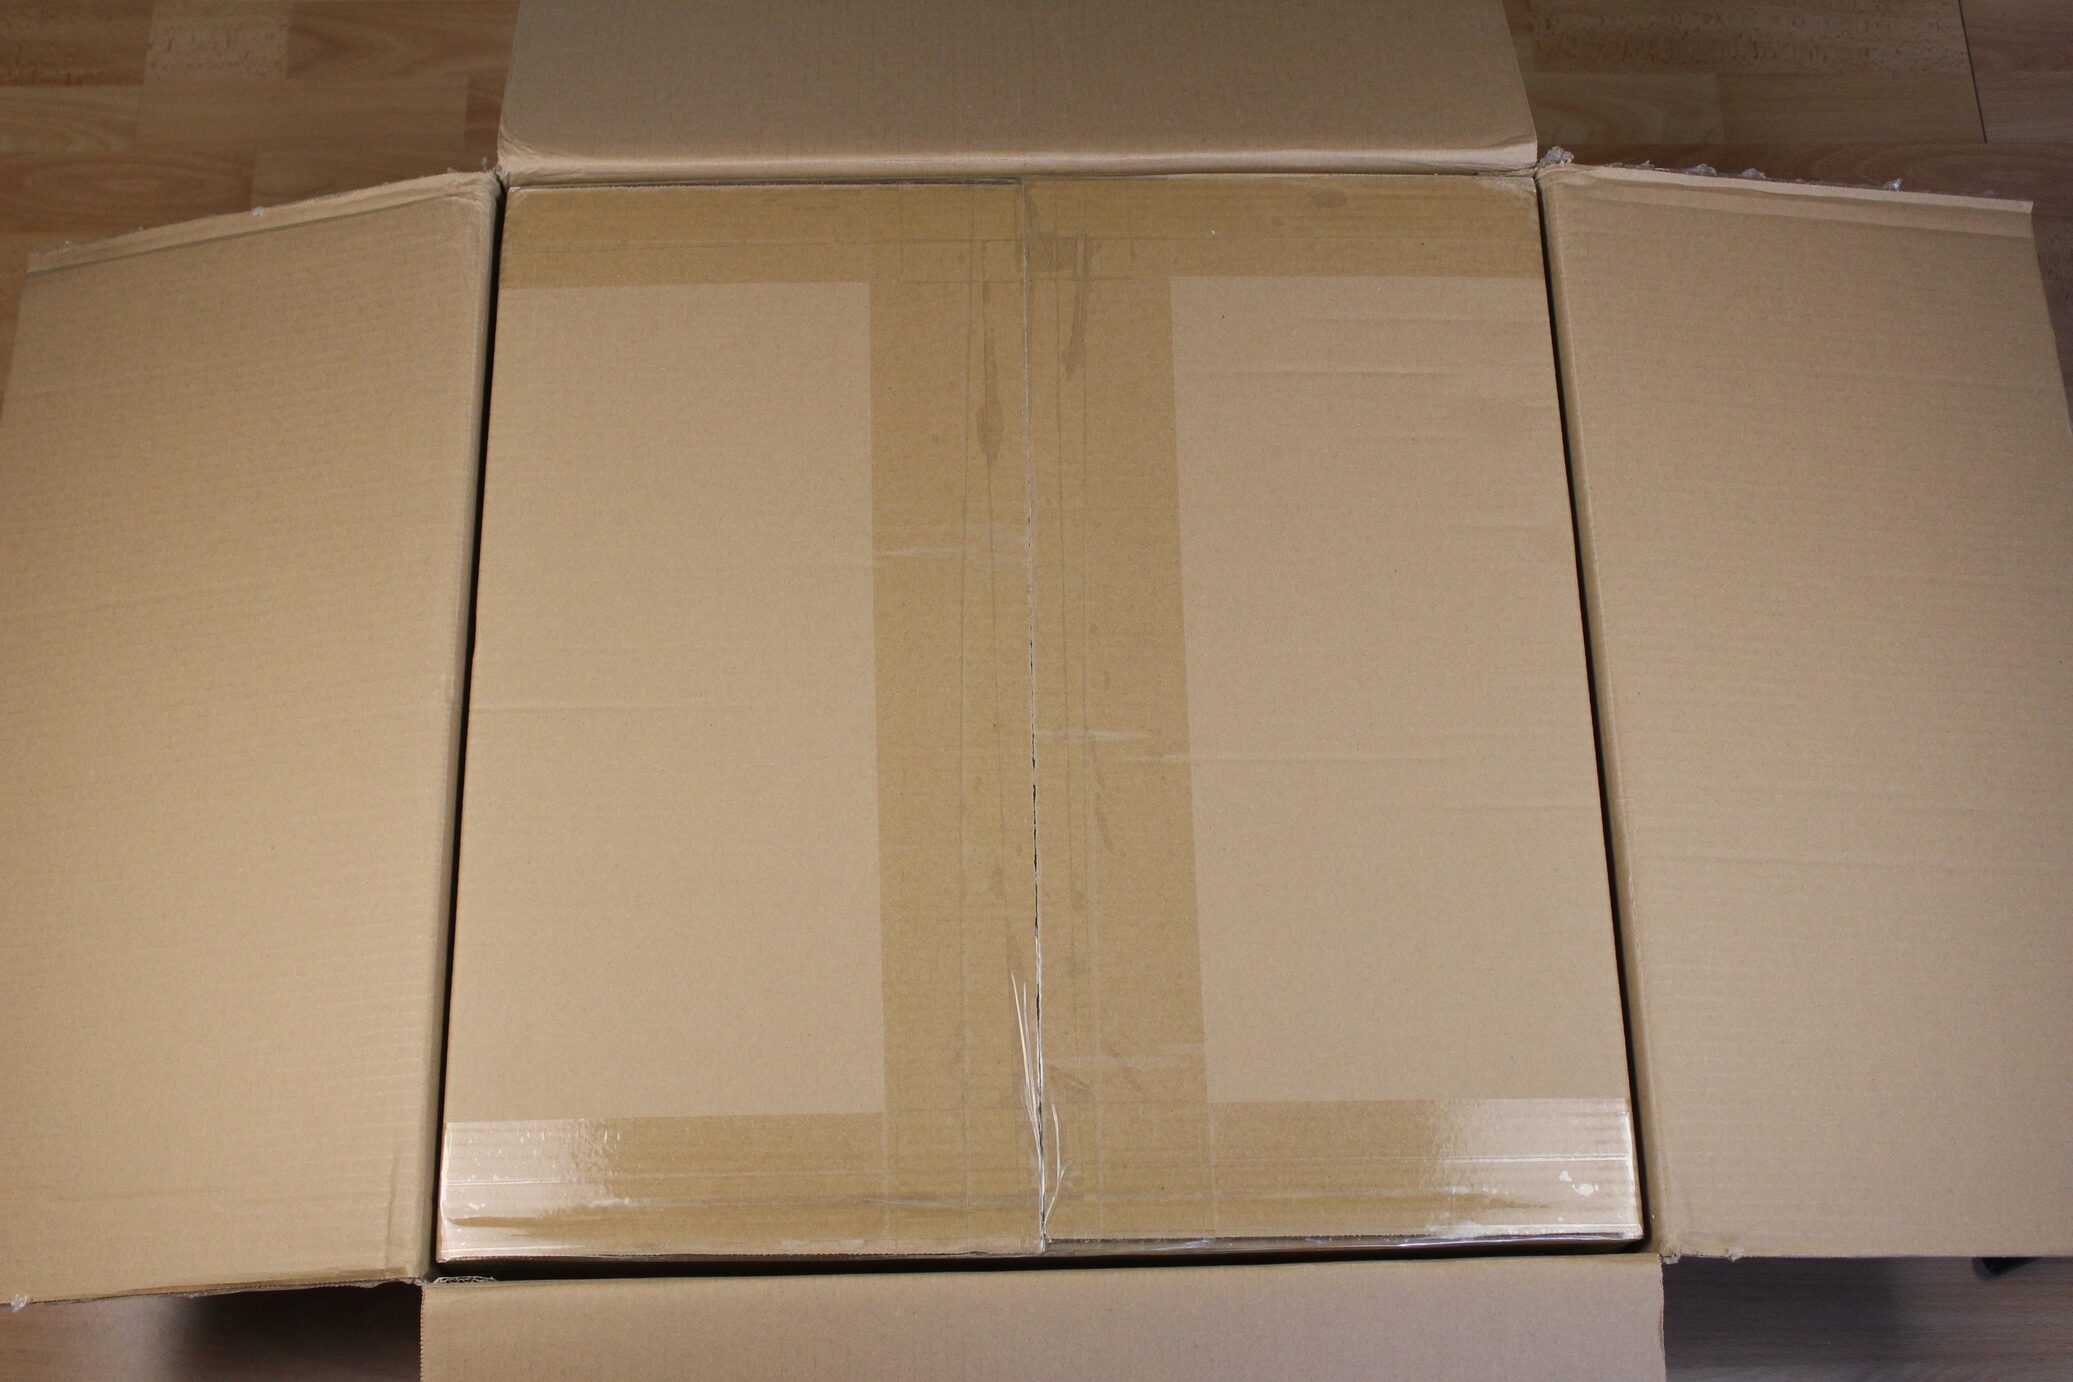 FYSETC Voron Trident Kit Review Packaging 10 rotated | VORON Trident FYSETC Kit Review: Is it worth it?